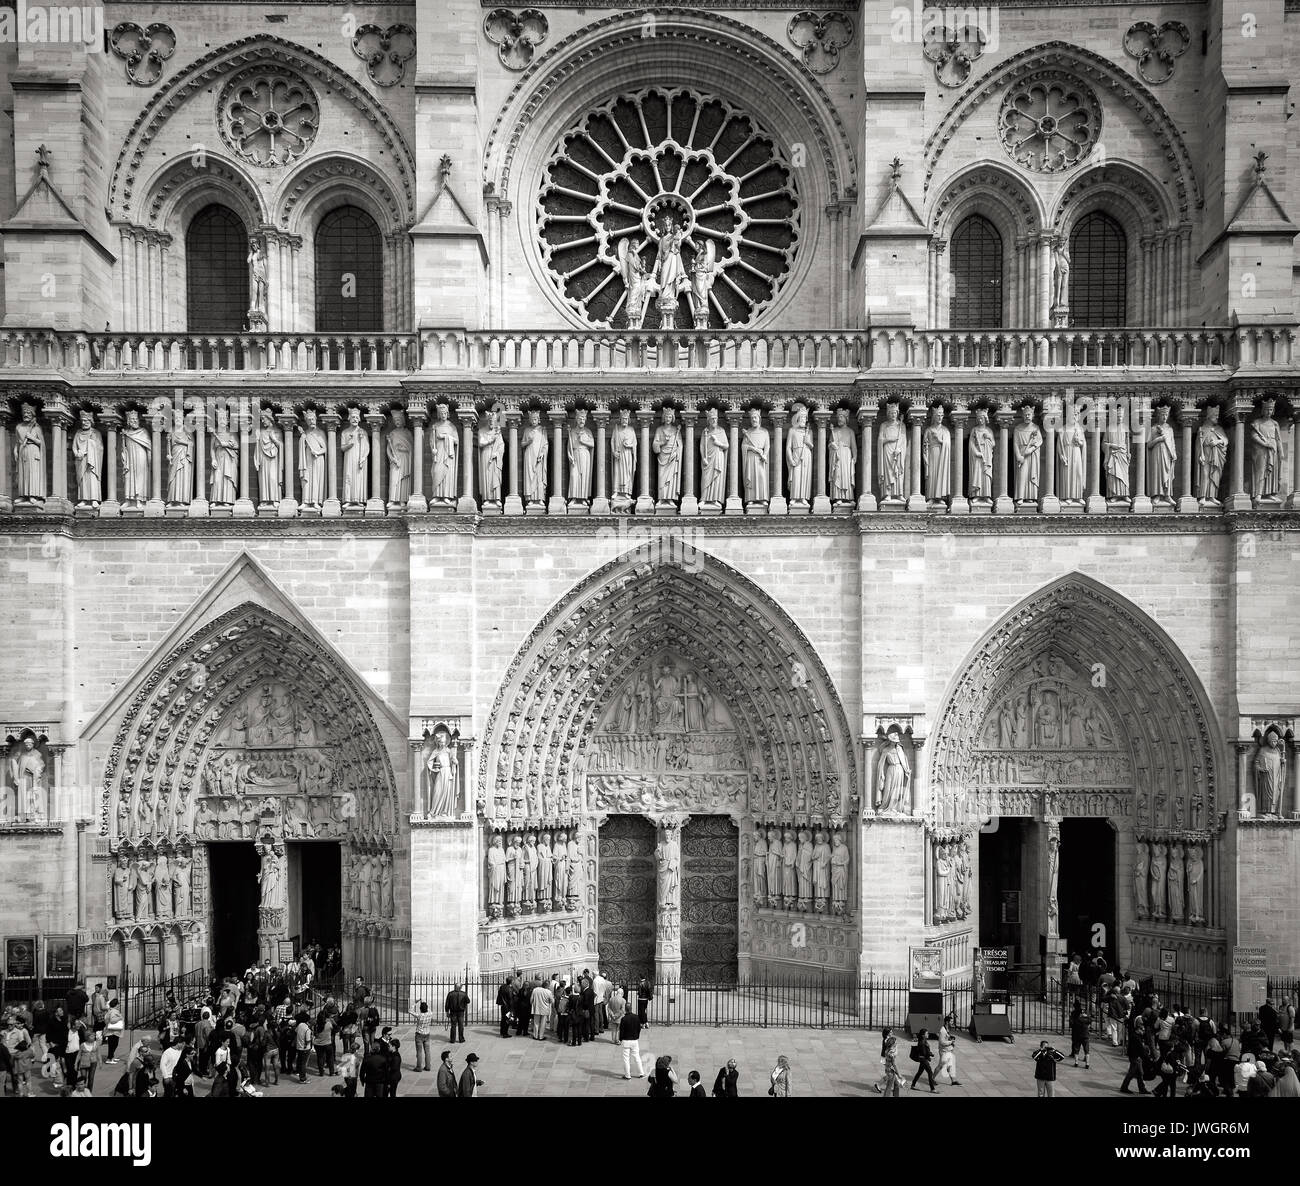 Fassade der Kathedrale Notre Dame, Paris Frankreich Stockfoto